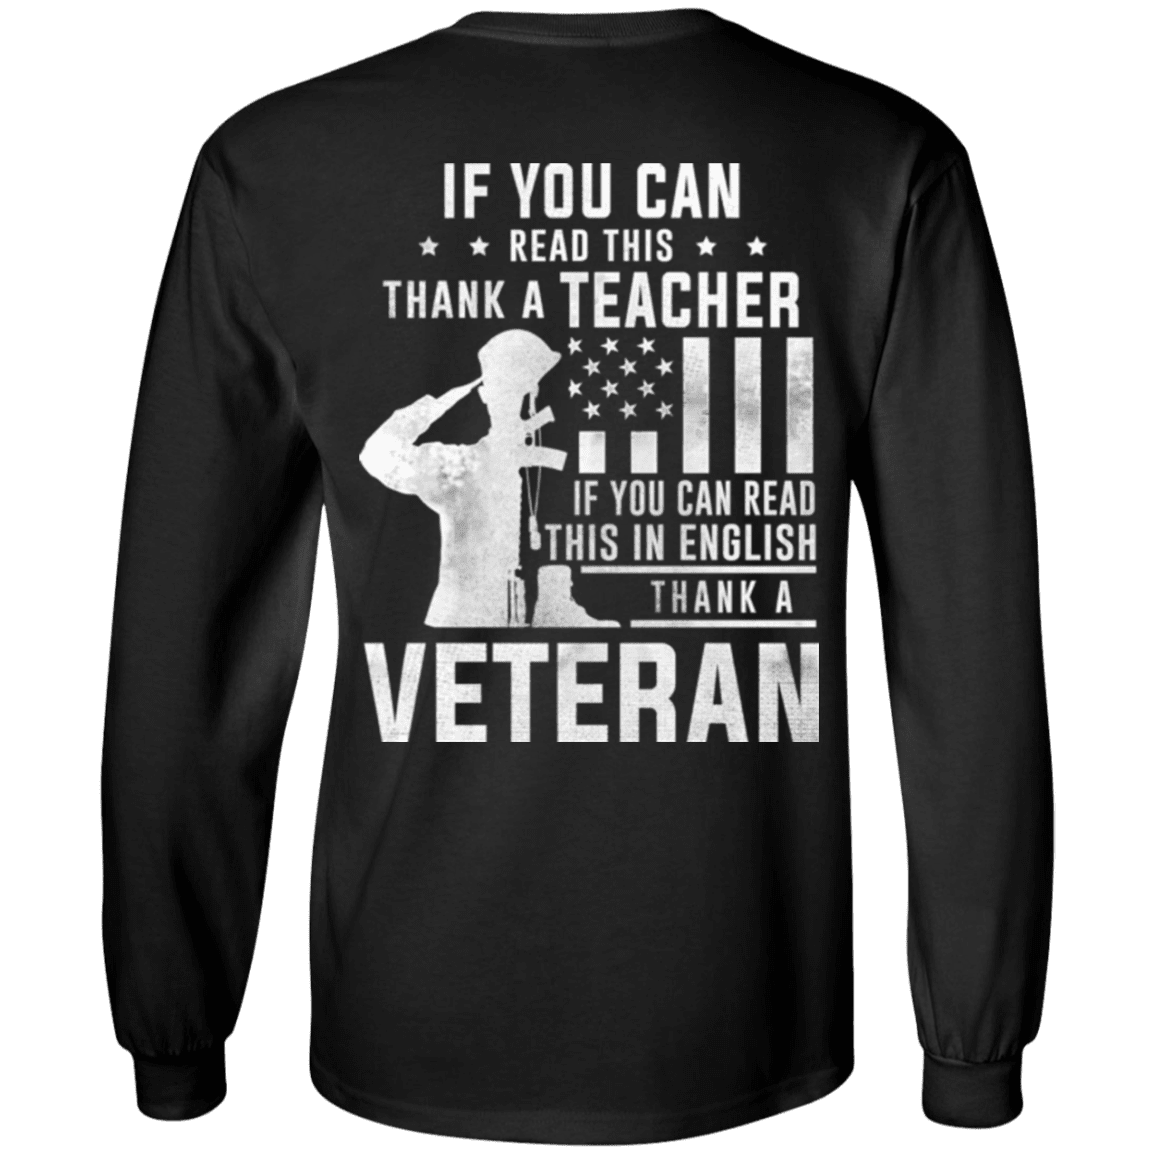 Military T-Shirt "Thank A Veteran"-TShirt-General-Veterans Nation